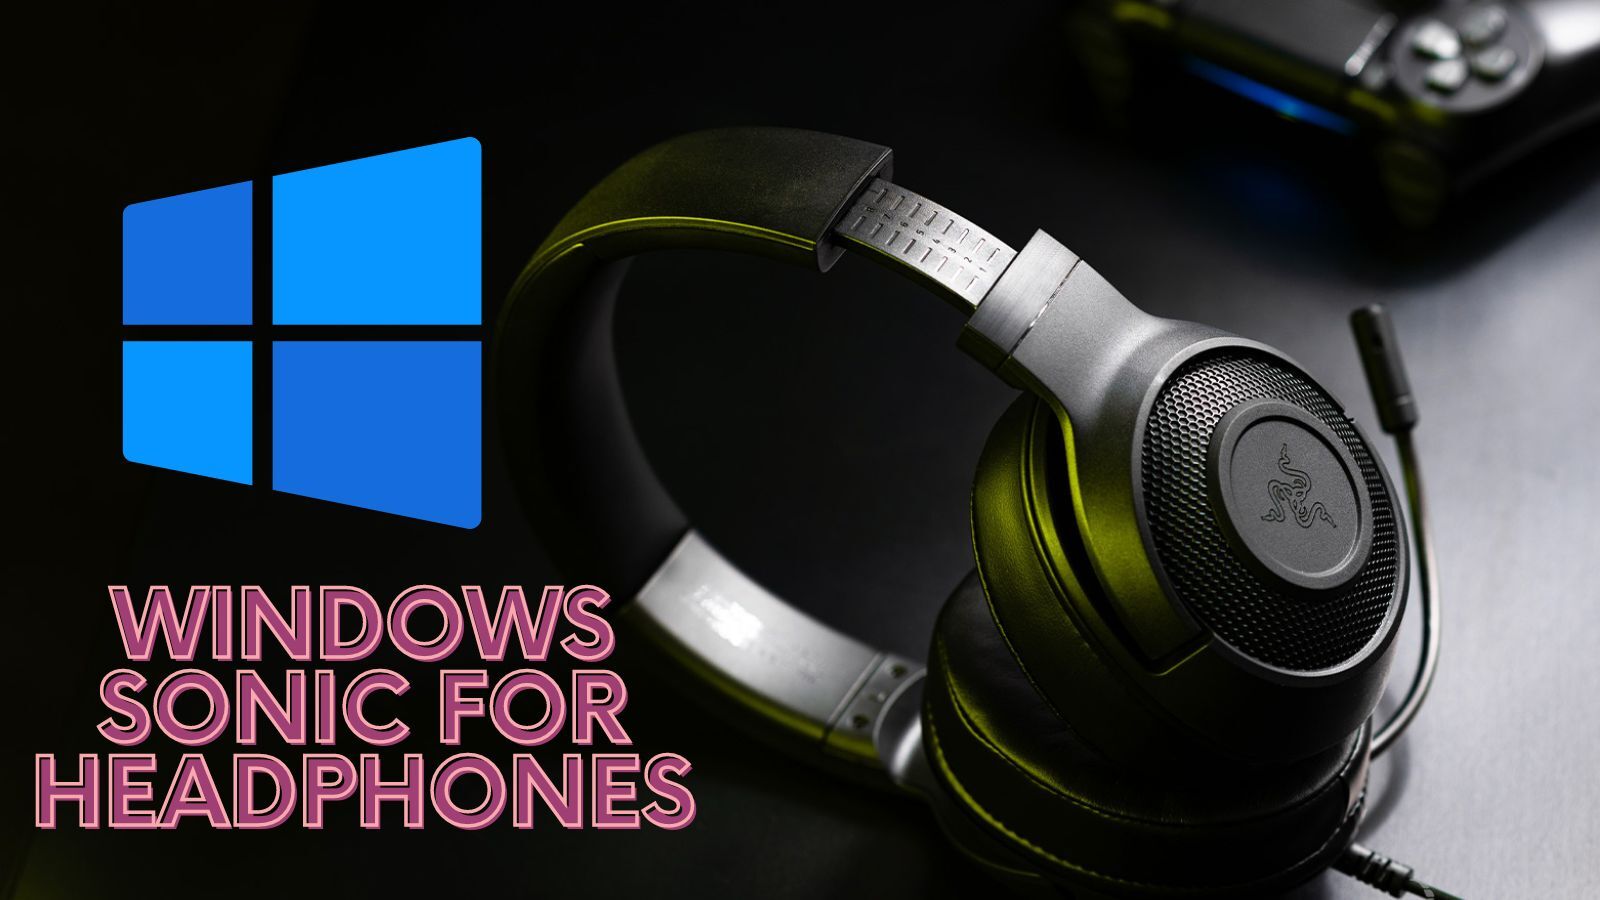 Windows Sonic for Headphones: Your Full Guide